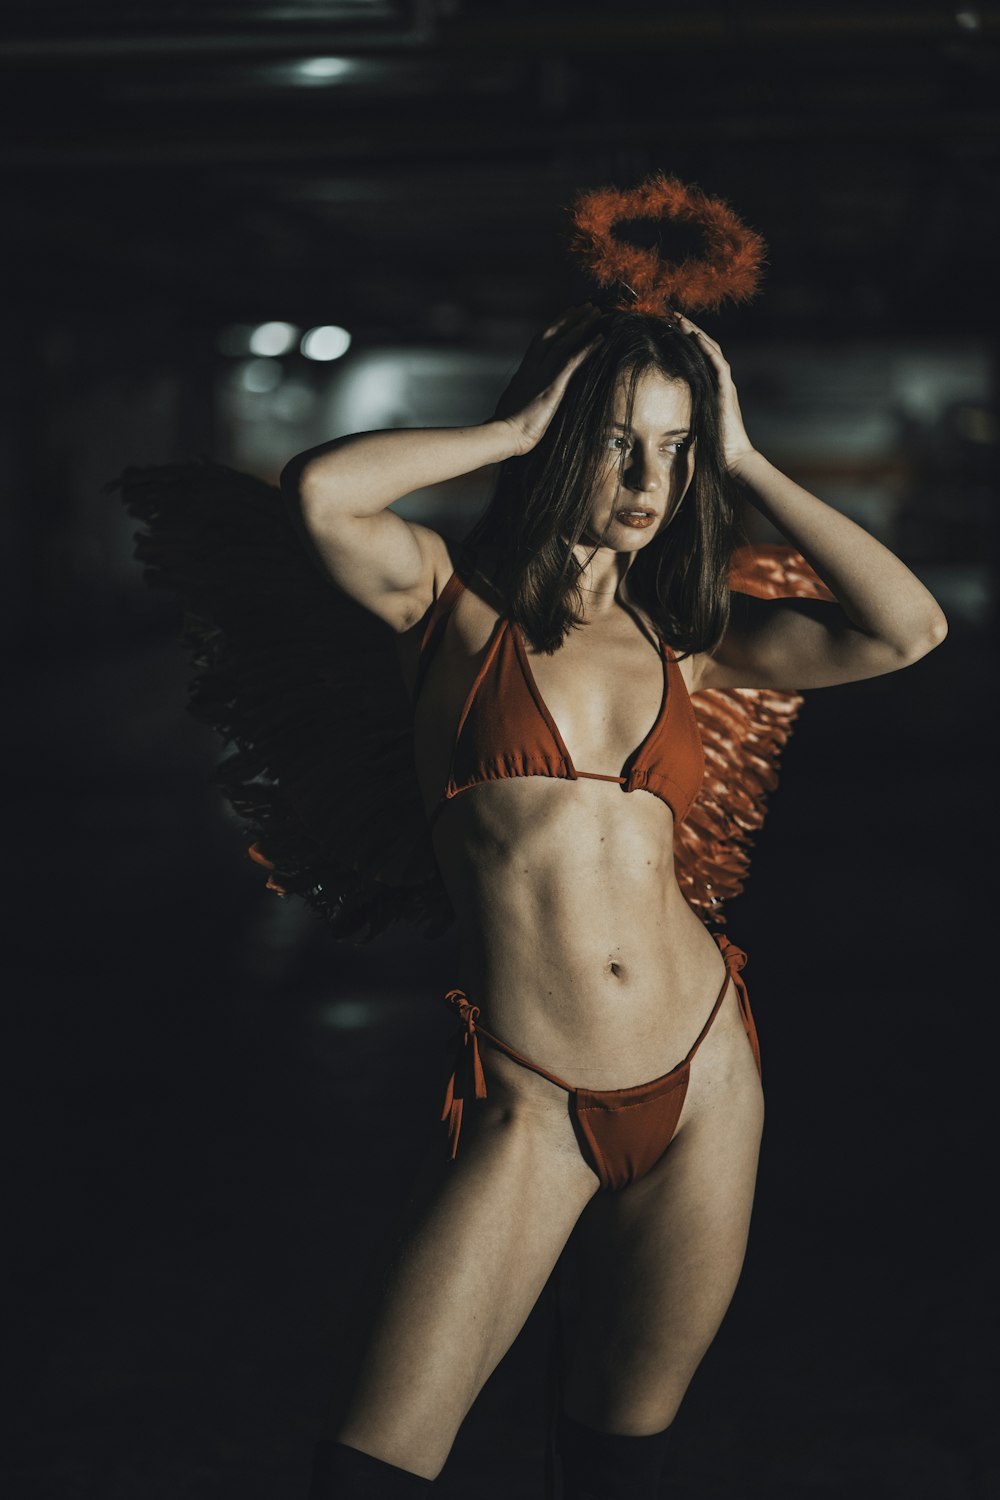 a woman in a bikini with wings on her head